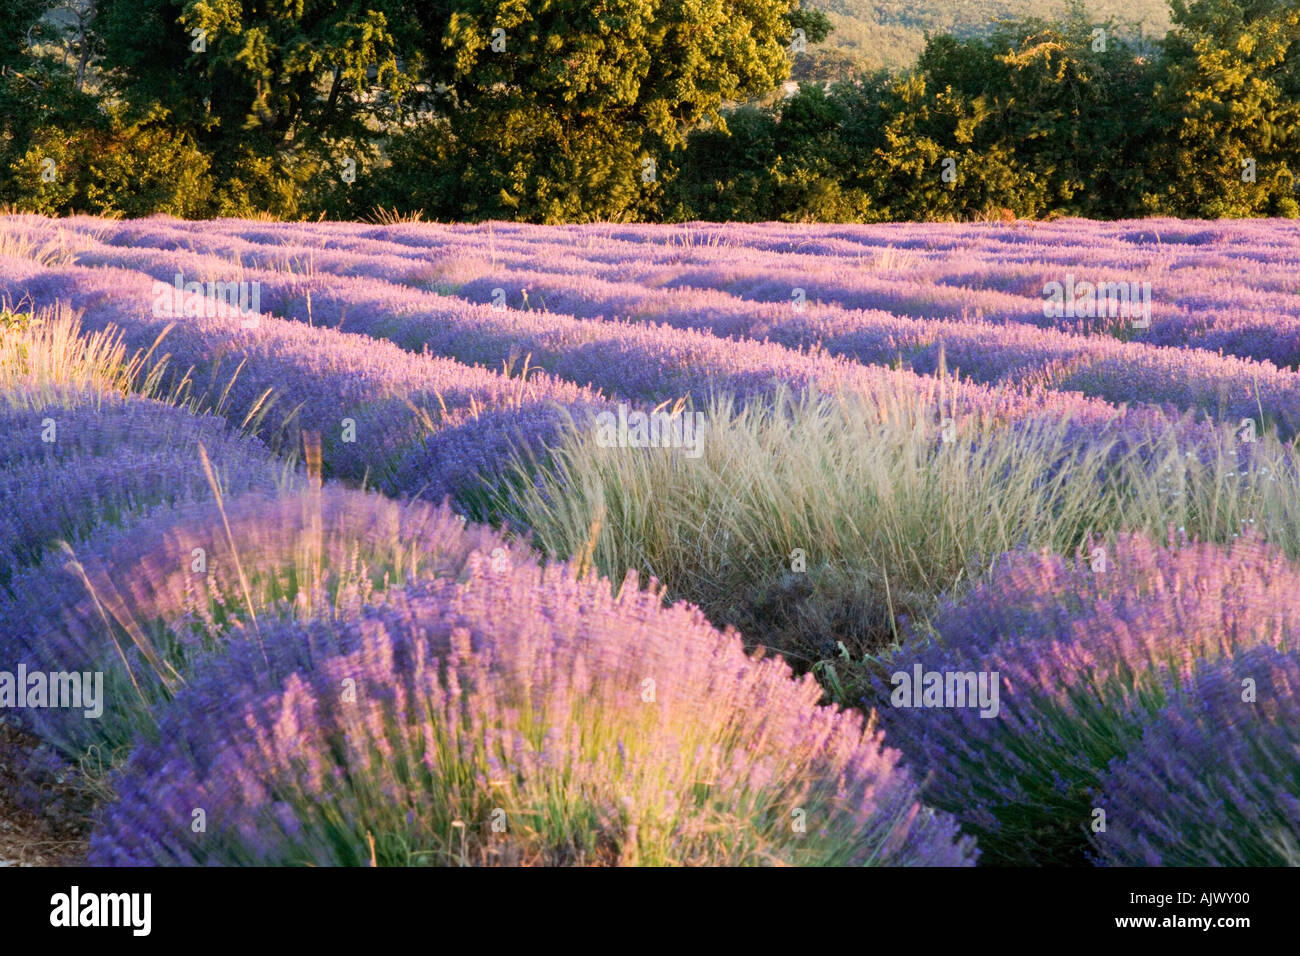 France Vaucluse region Lavender field Stock Photo